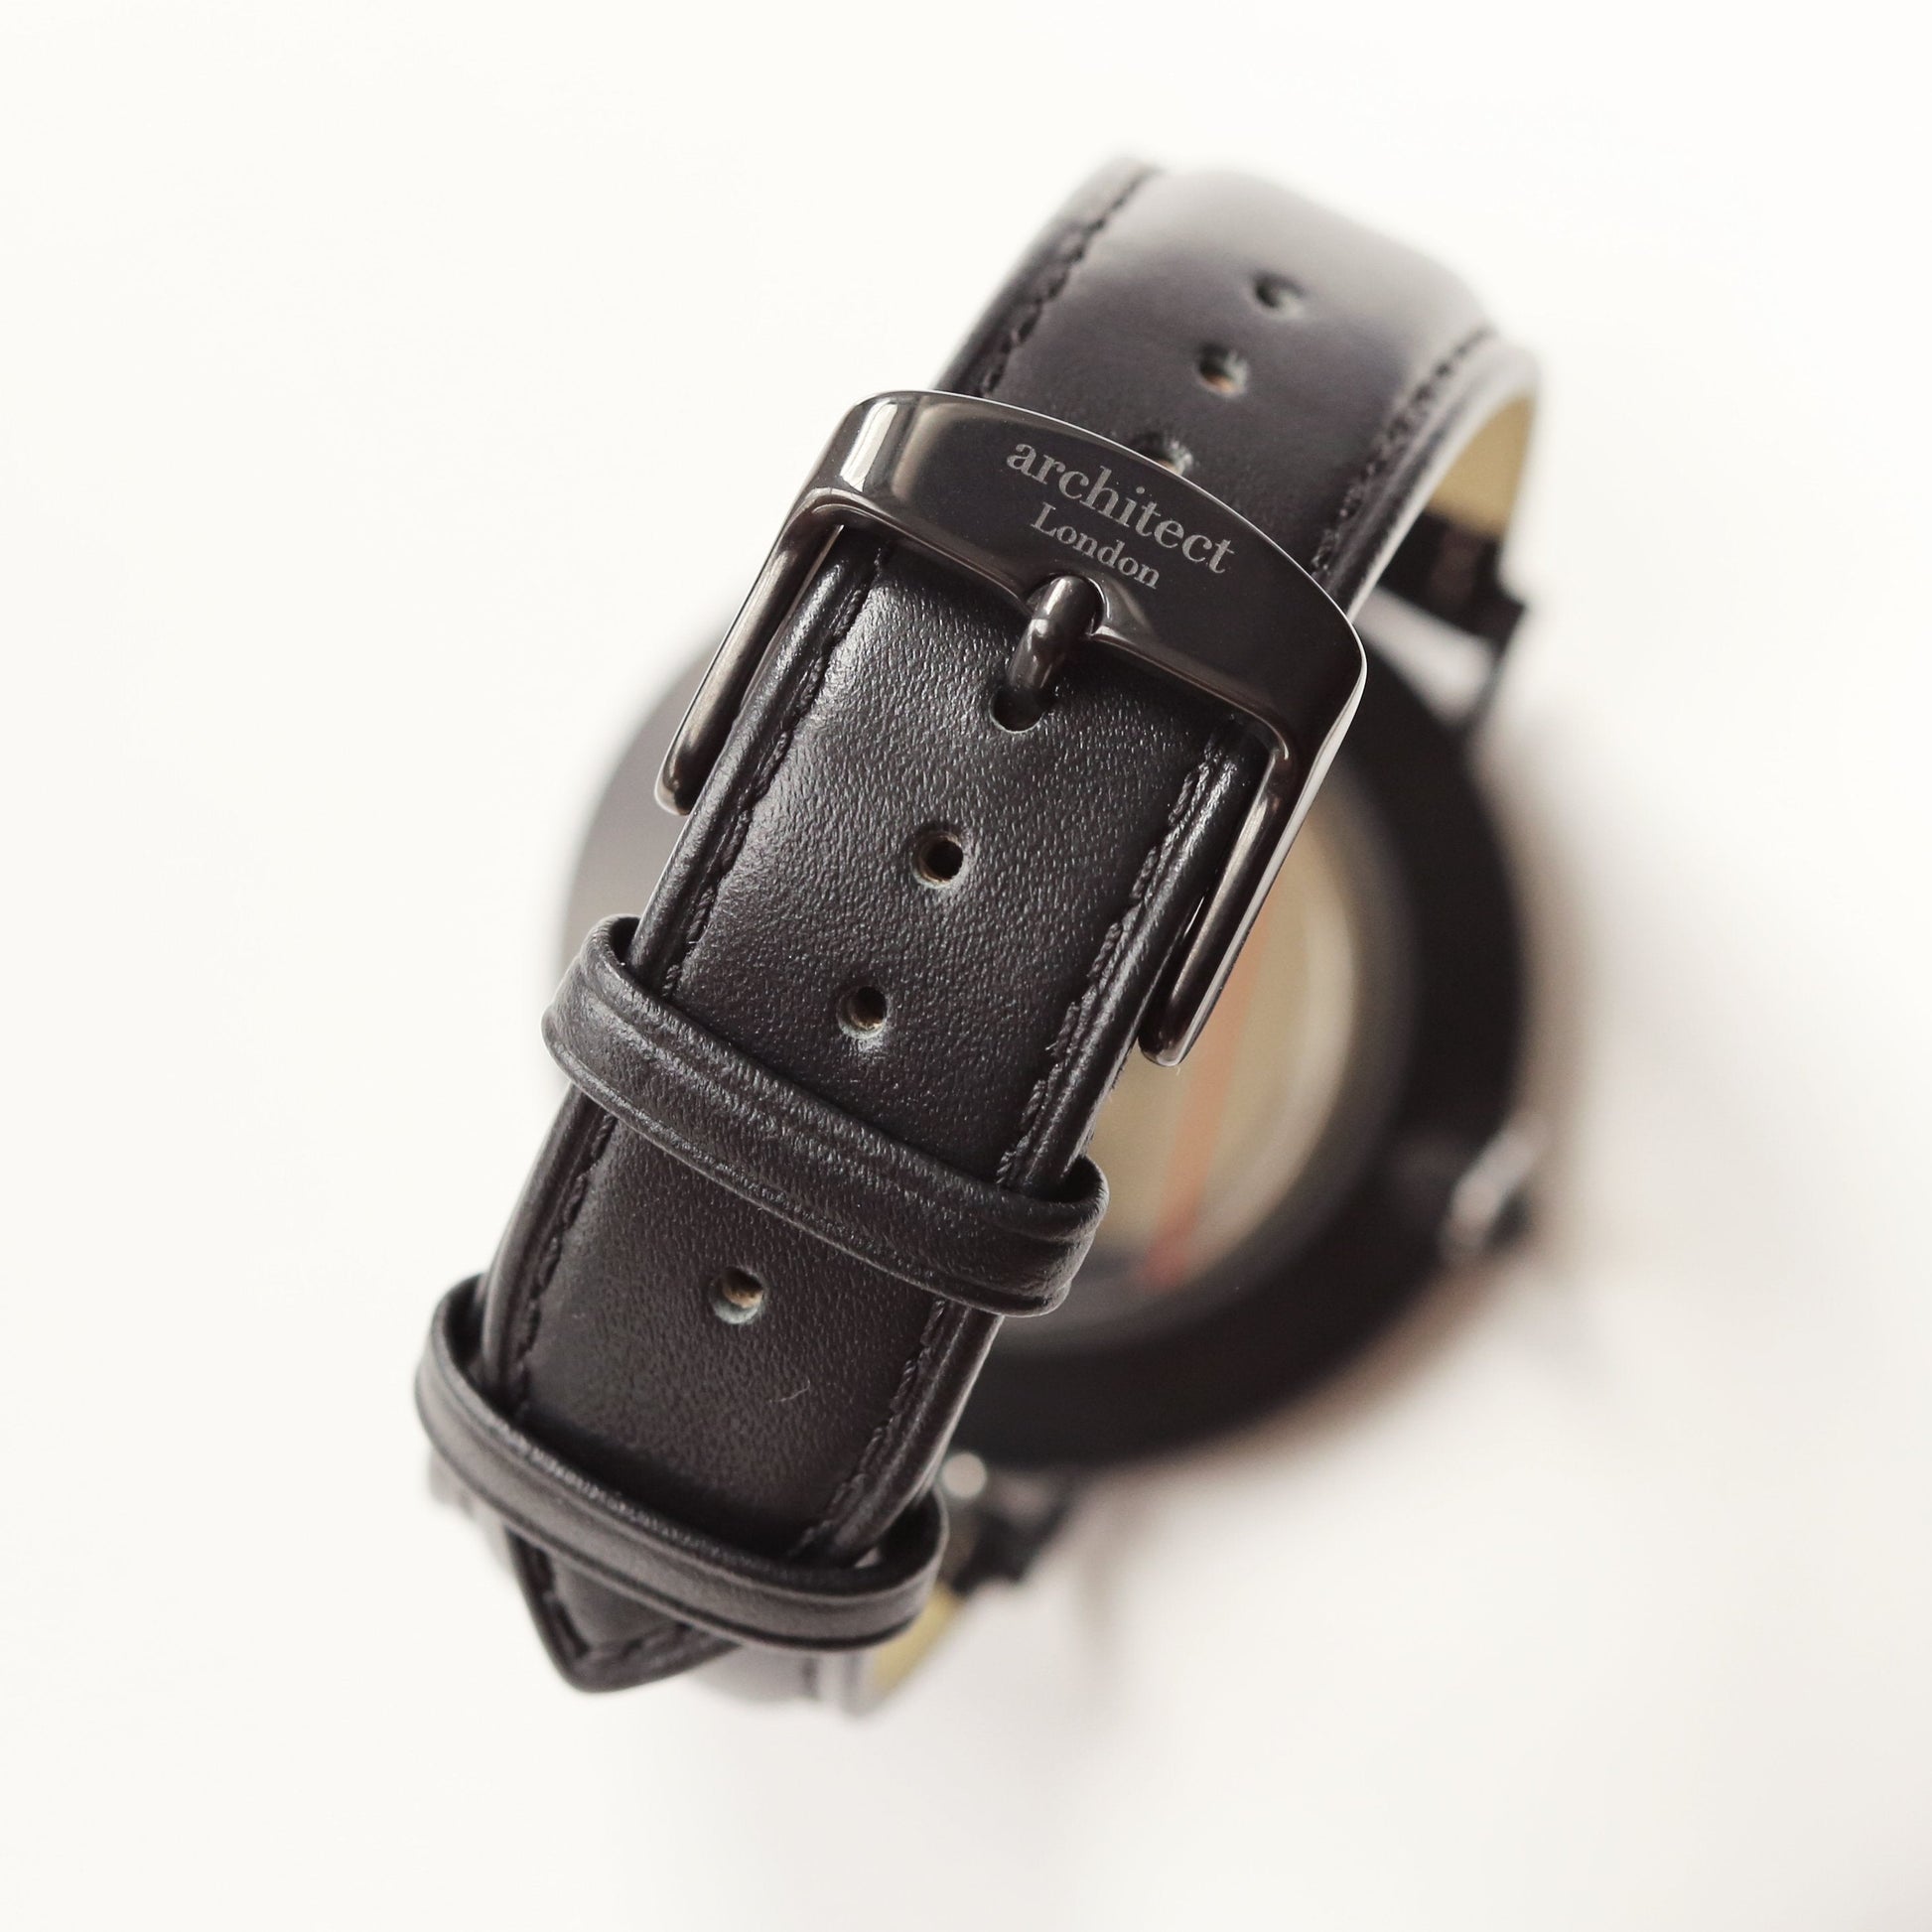 Personalized Men's Watches - Men's Minimalist Engraved Watch In Jet Black 